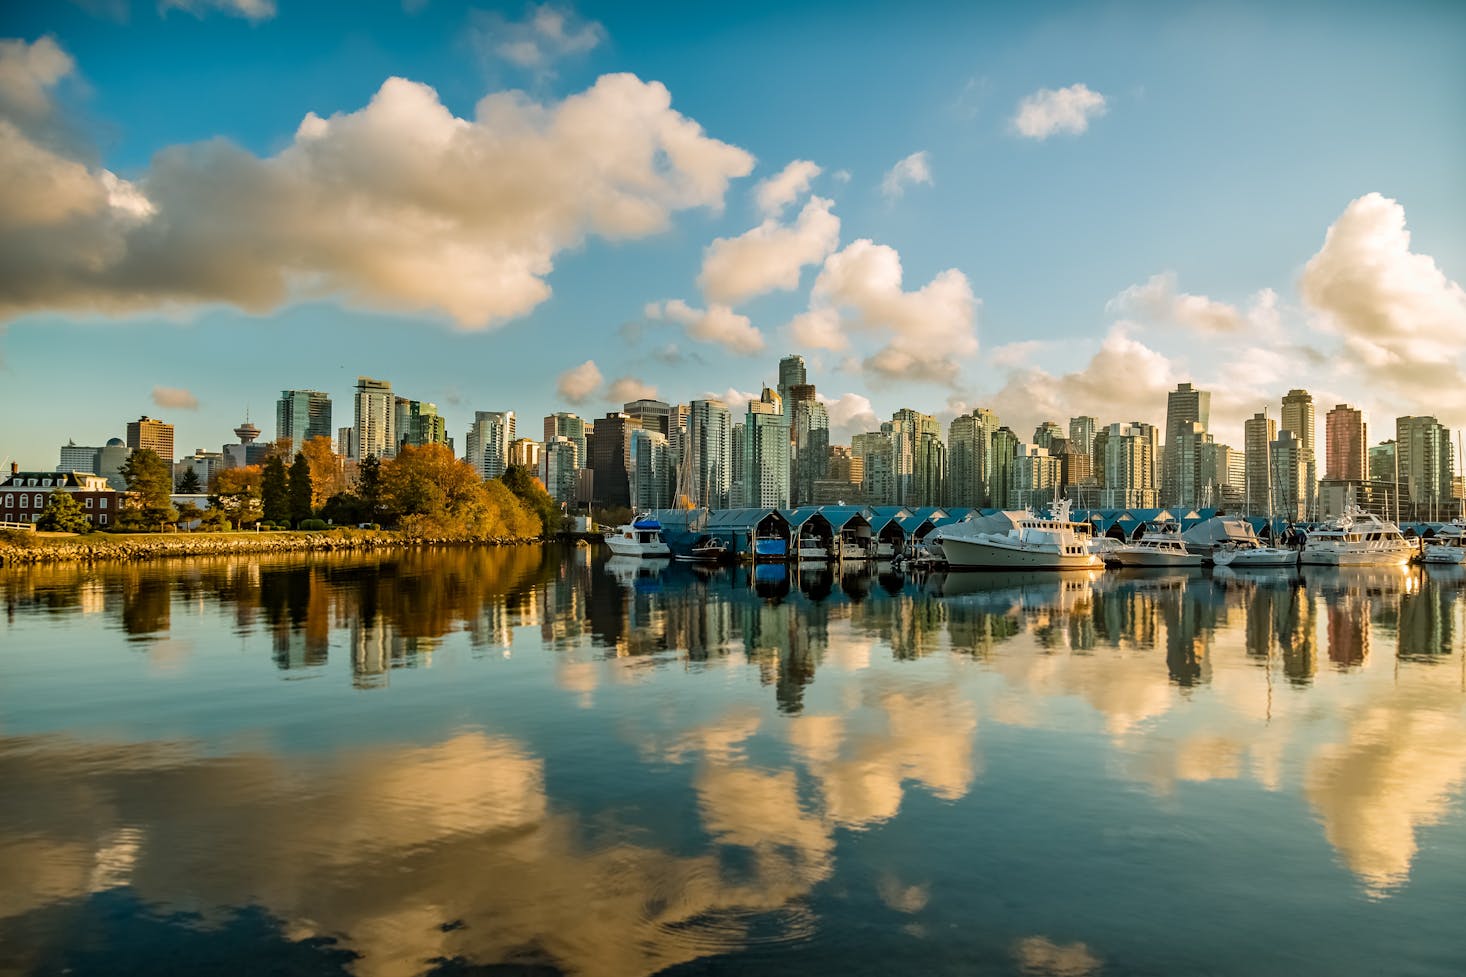 Skyline of Vancouver, Canada